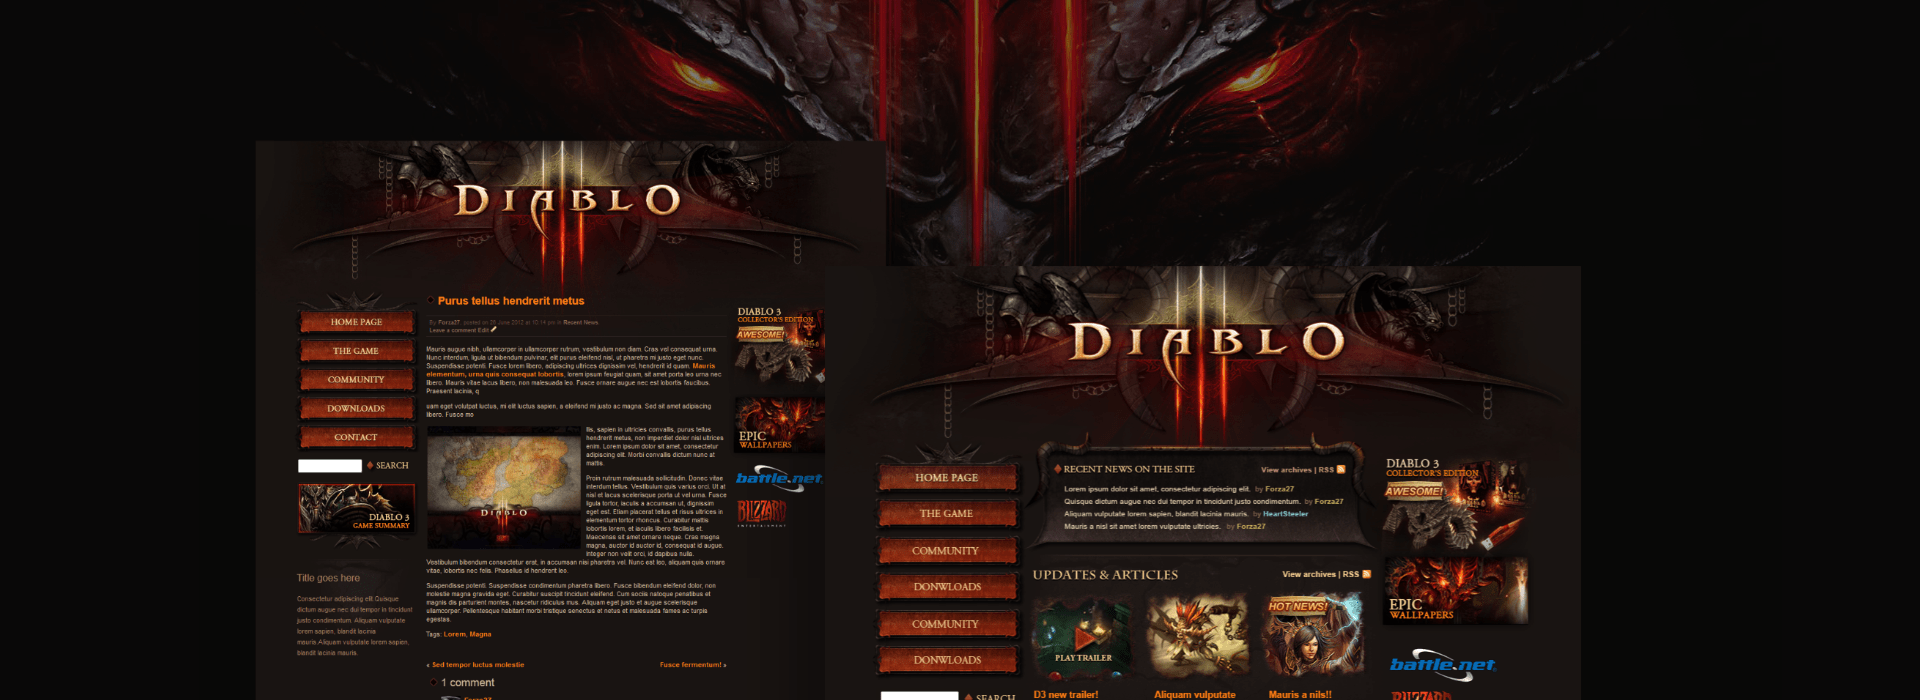 Diablo 3 Wordpress